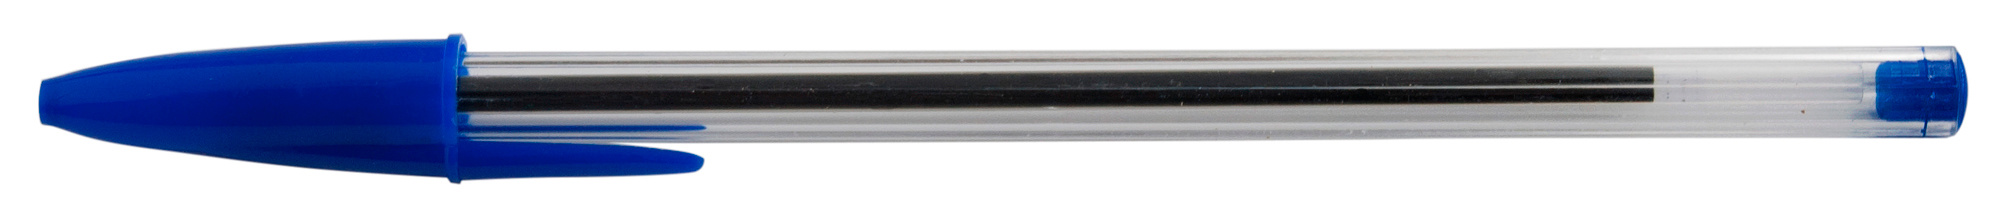 Ручка шариков. Buro d=0.7мм син. черн. кор.карт. одноразовая ручка линия 0.5мм без инд. Маркировки